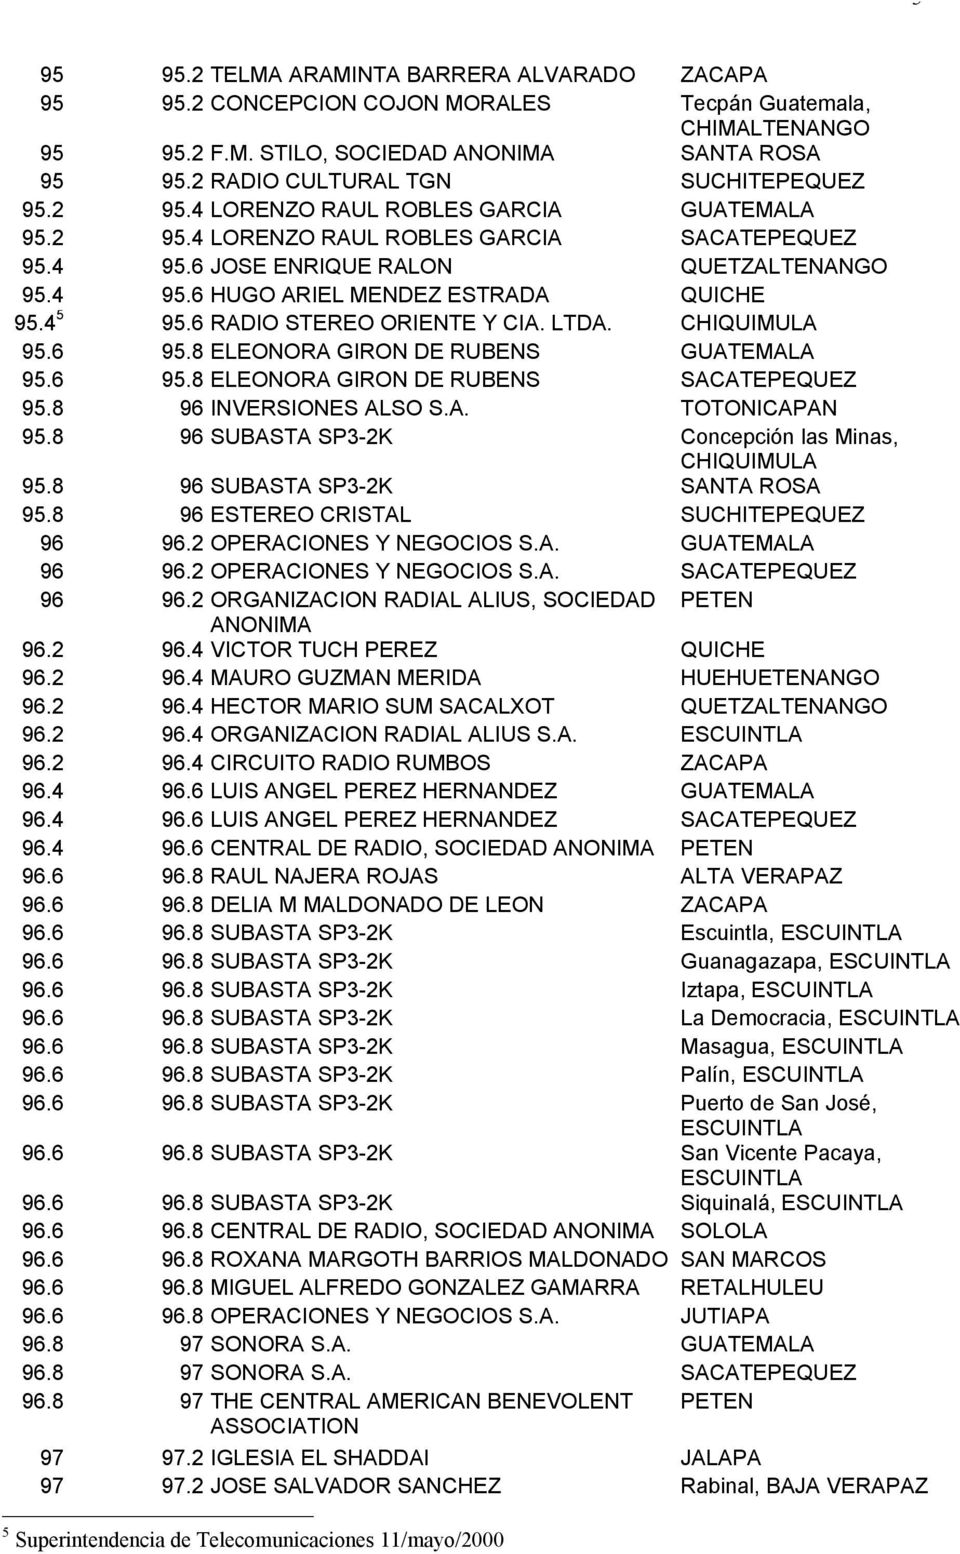 LTDA. CHIQUIMULA 95.6 95.8 ELEONORA GIRON DE RUBENS GUATEMALA 95.6 95.8 ELEONORA GIRON DE RUBENS SACATEPEQUEZ 95.8 96 INVERSIONES ALSO S.A. TOTONICAPAN 95.